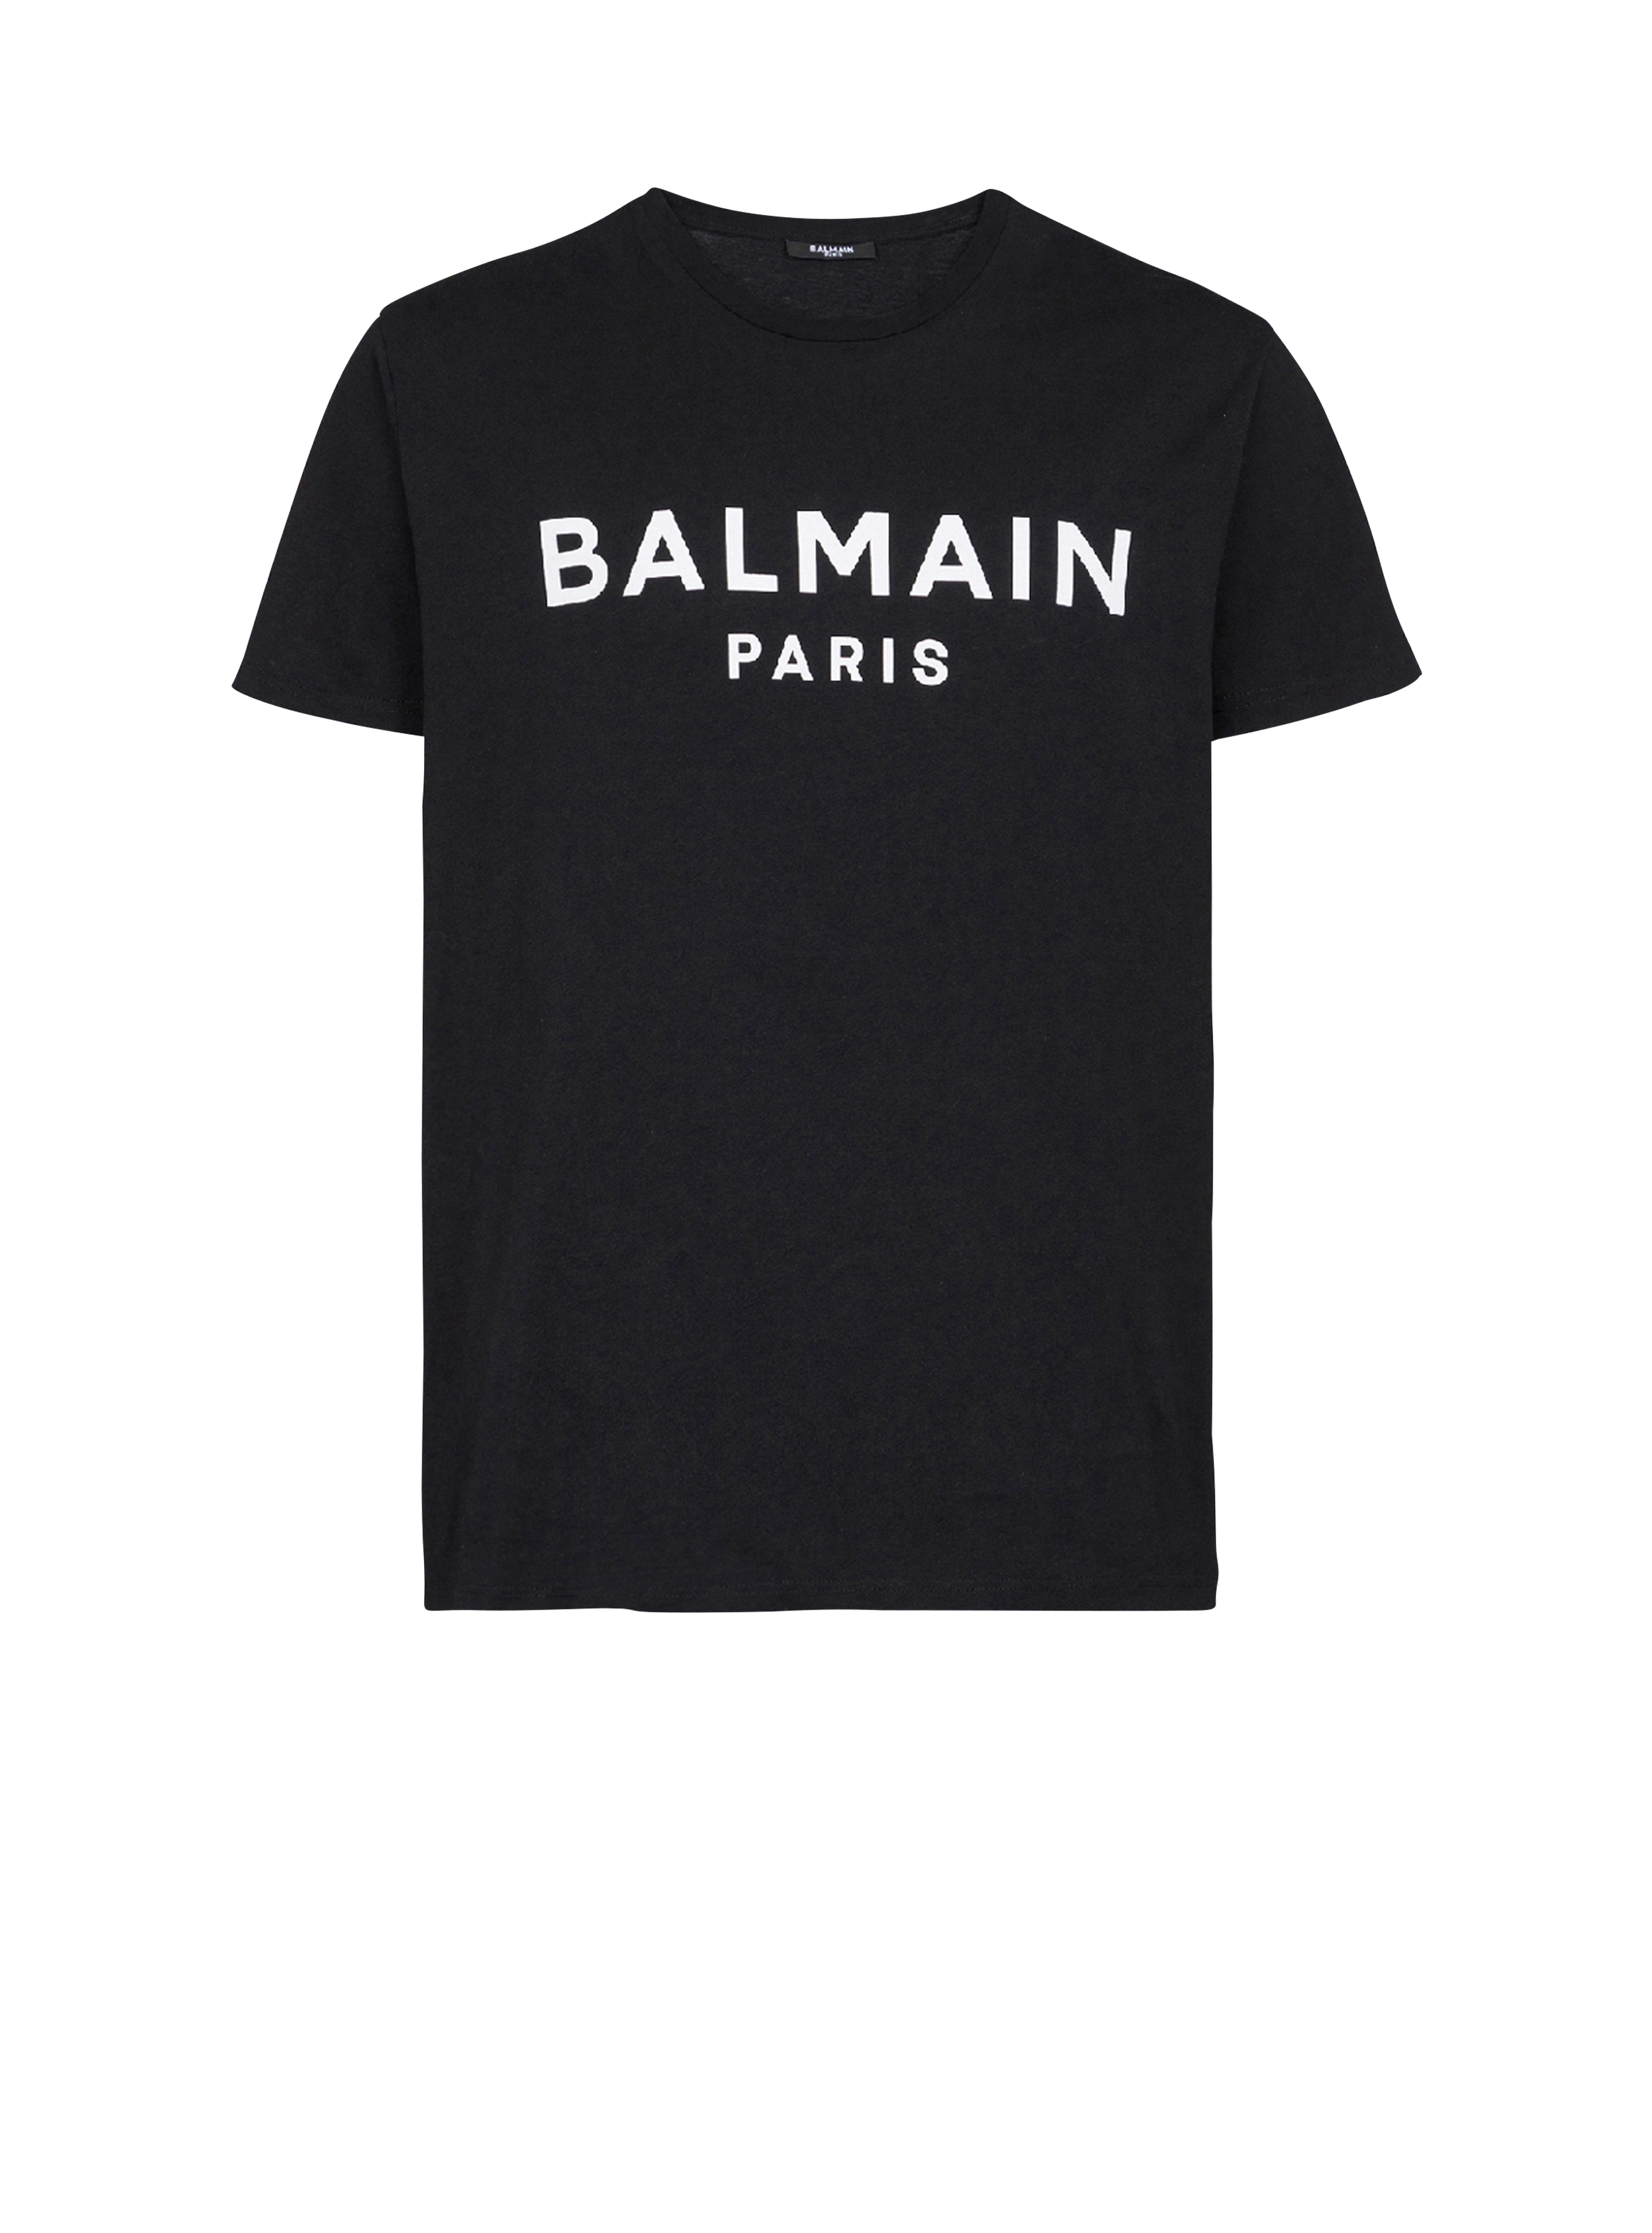 Eco-designed cotton T-shirt with Balmain Paris logo print, black